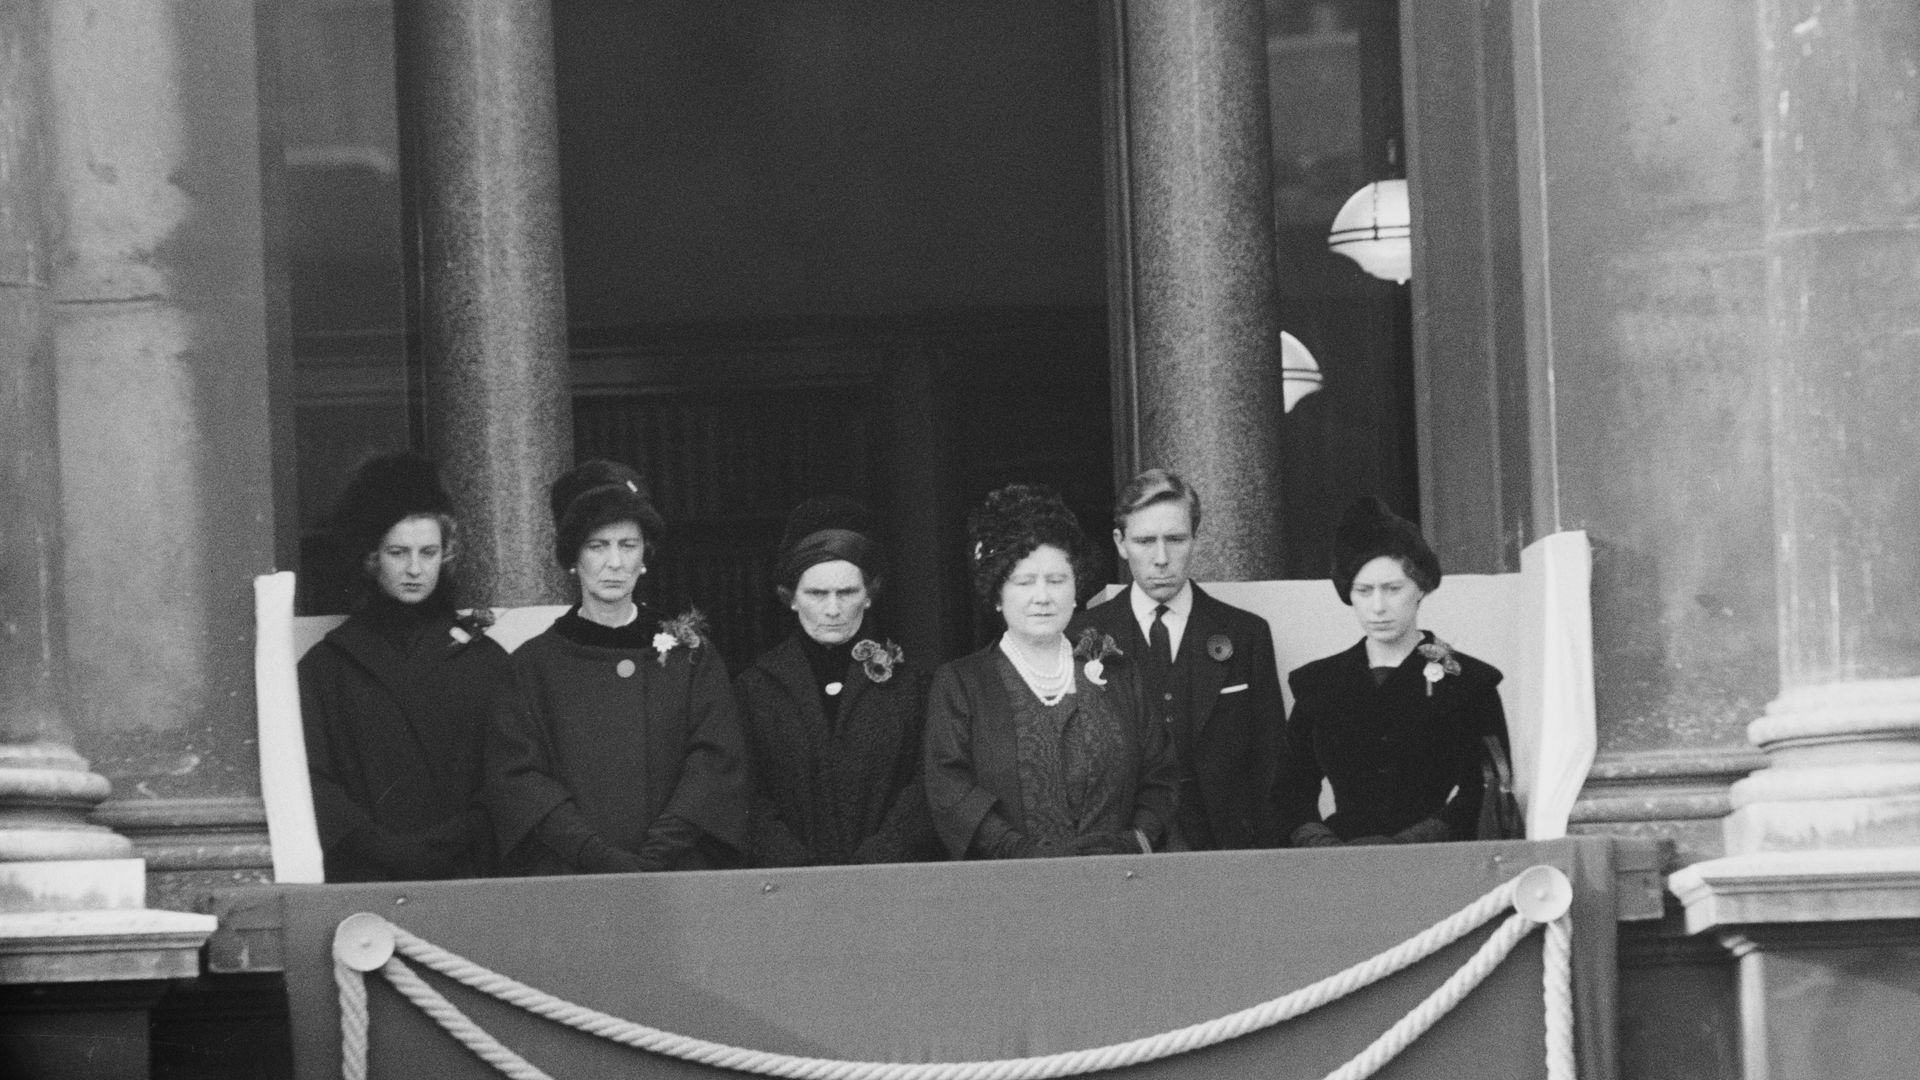 Princess Alexandra, Princess Marina, Princess Alice, the Queen Mother, Antony Armstrong-Jones and Princess Margaret in black on a balcony in Buckingham Palace